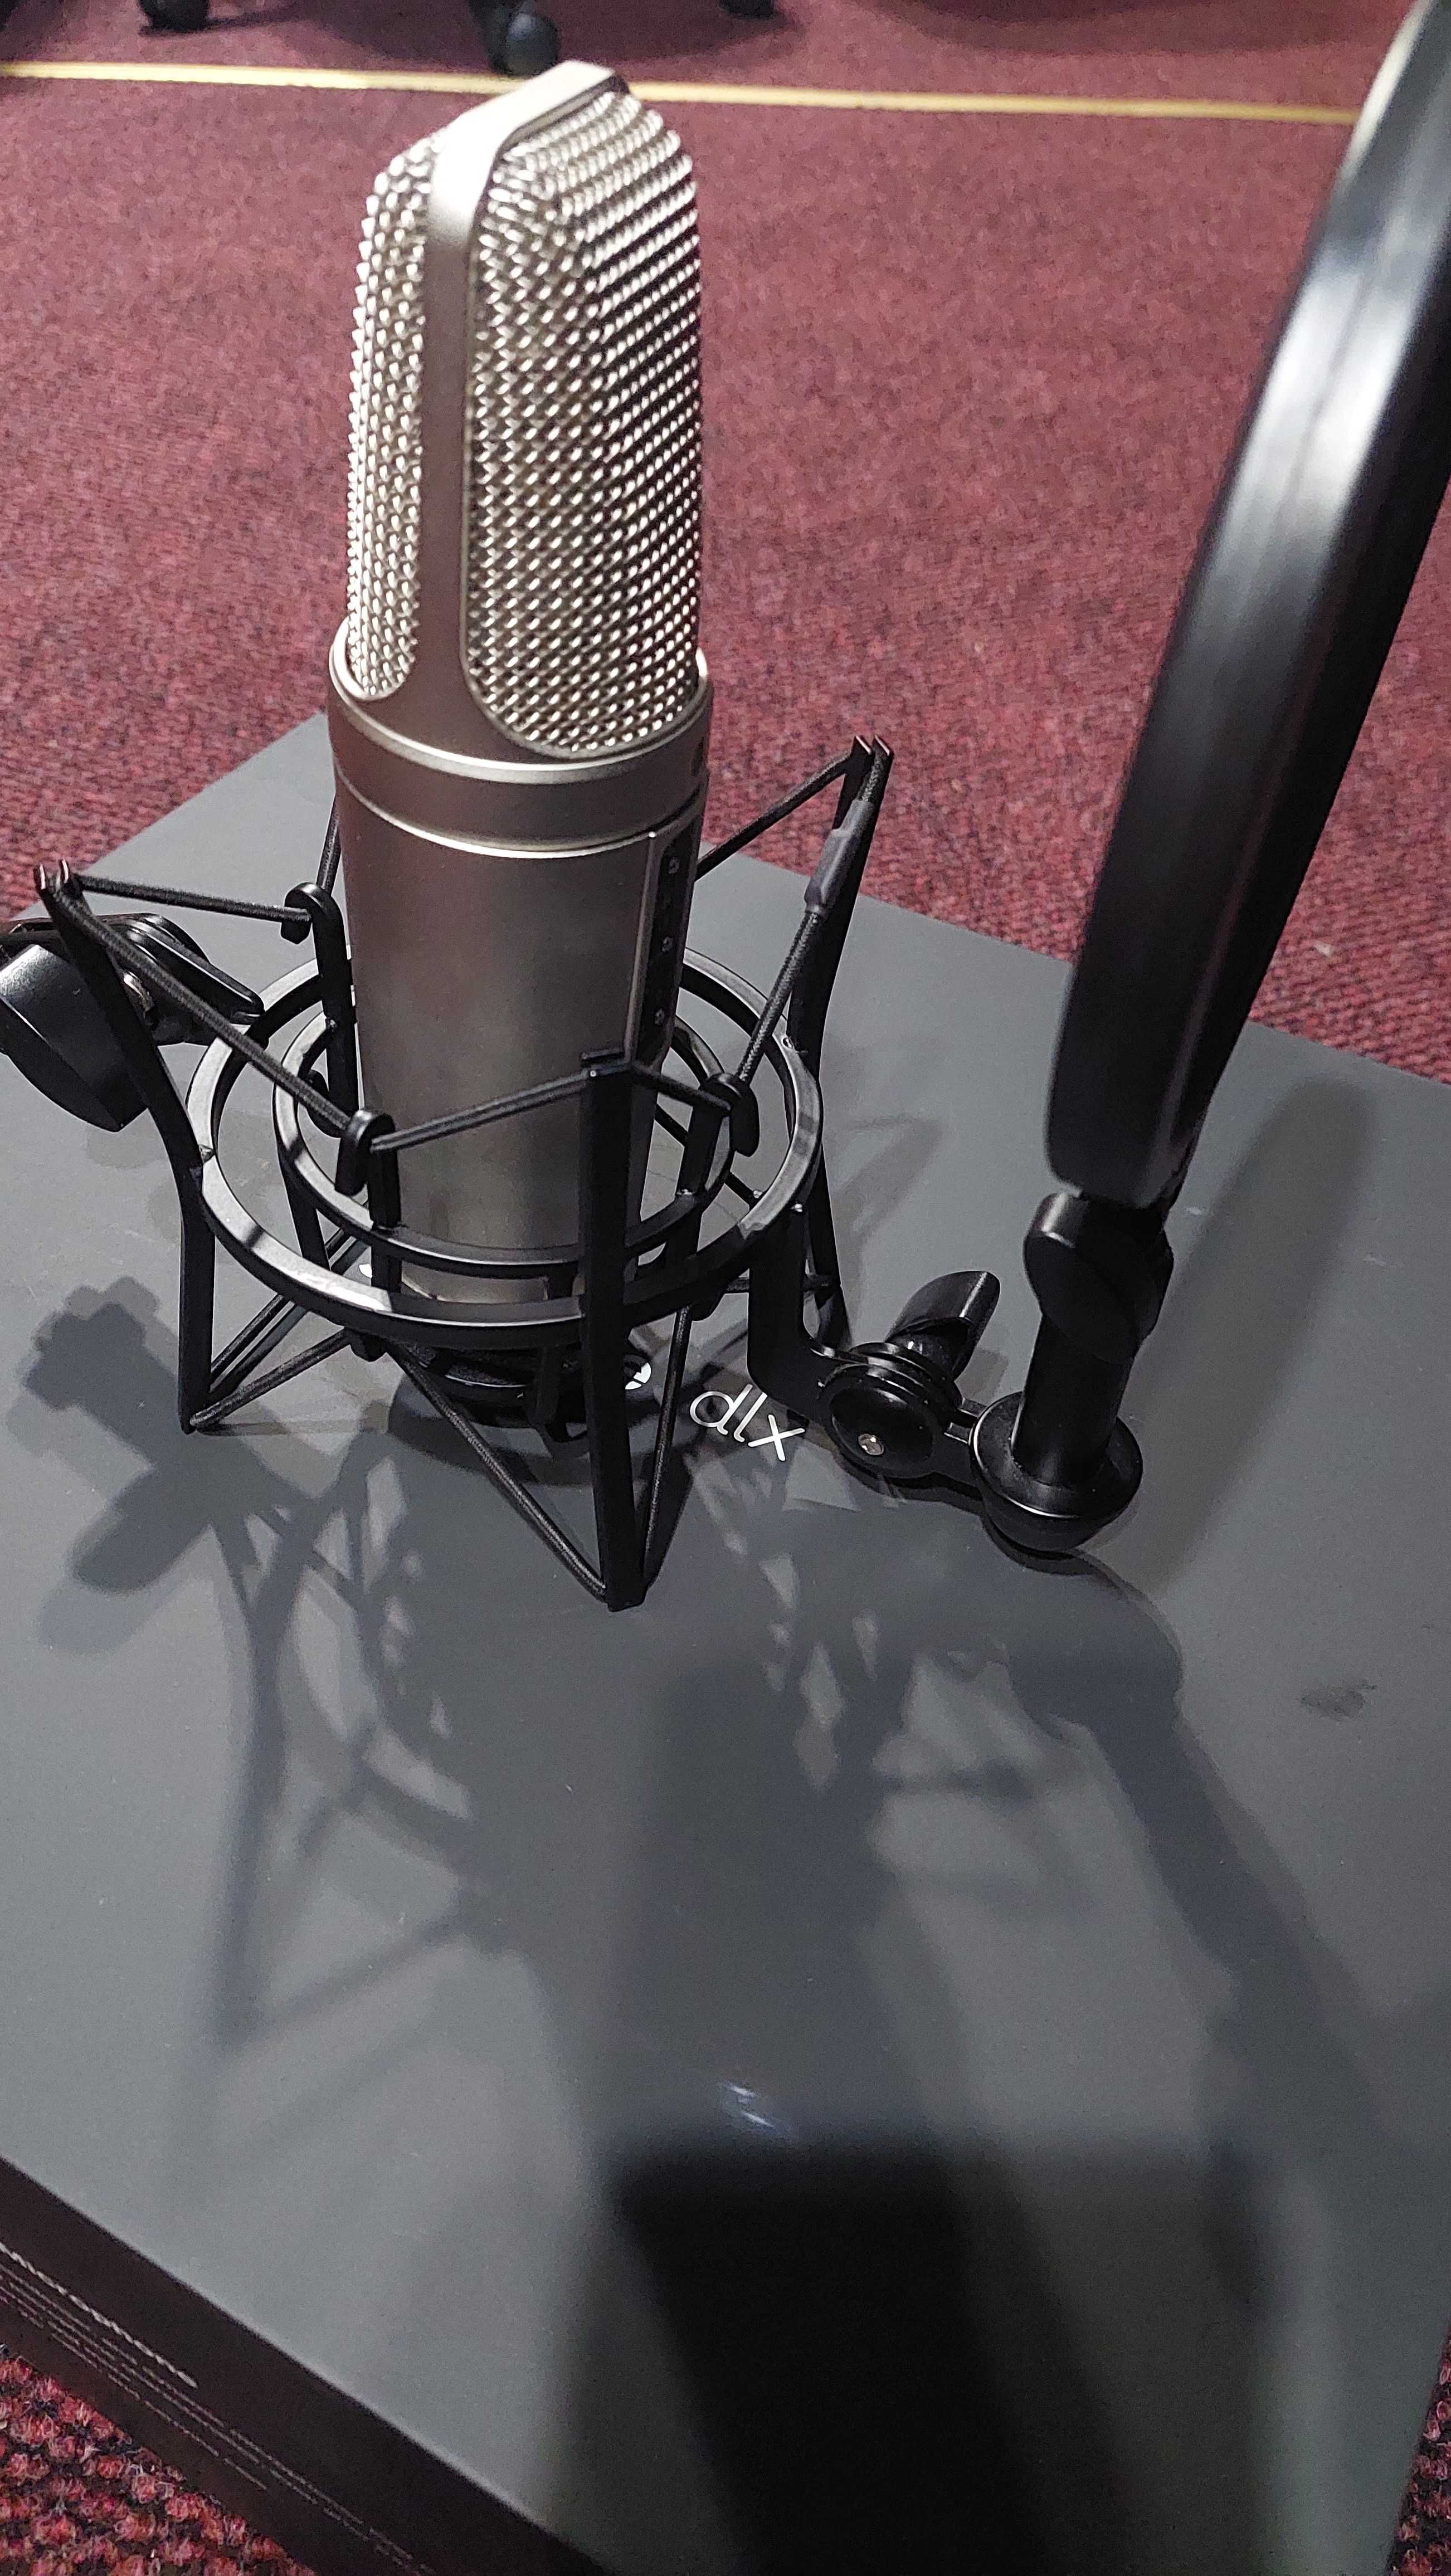 Microfon studio Rode Nt2A, Interfață audio Steinberg ur44c